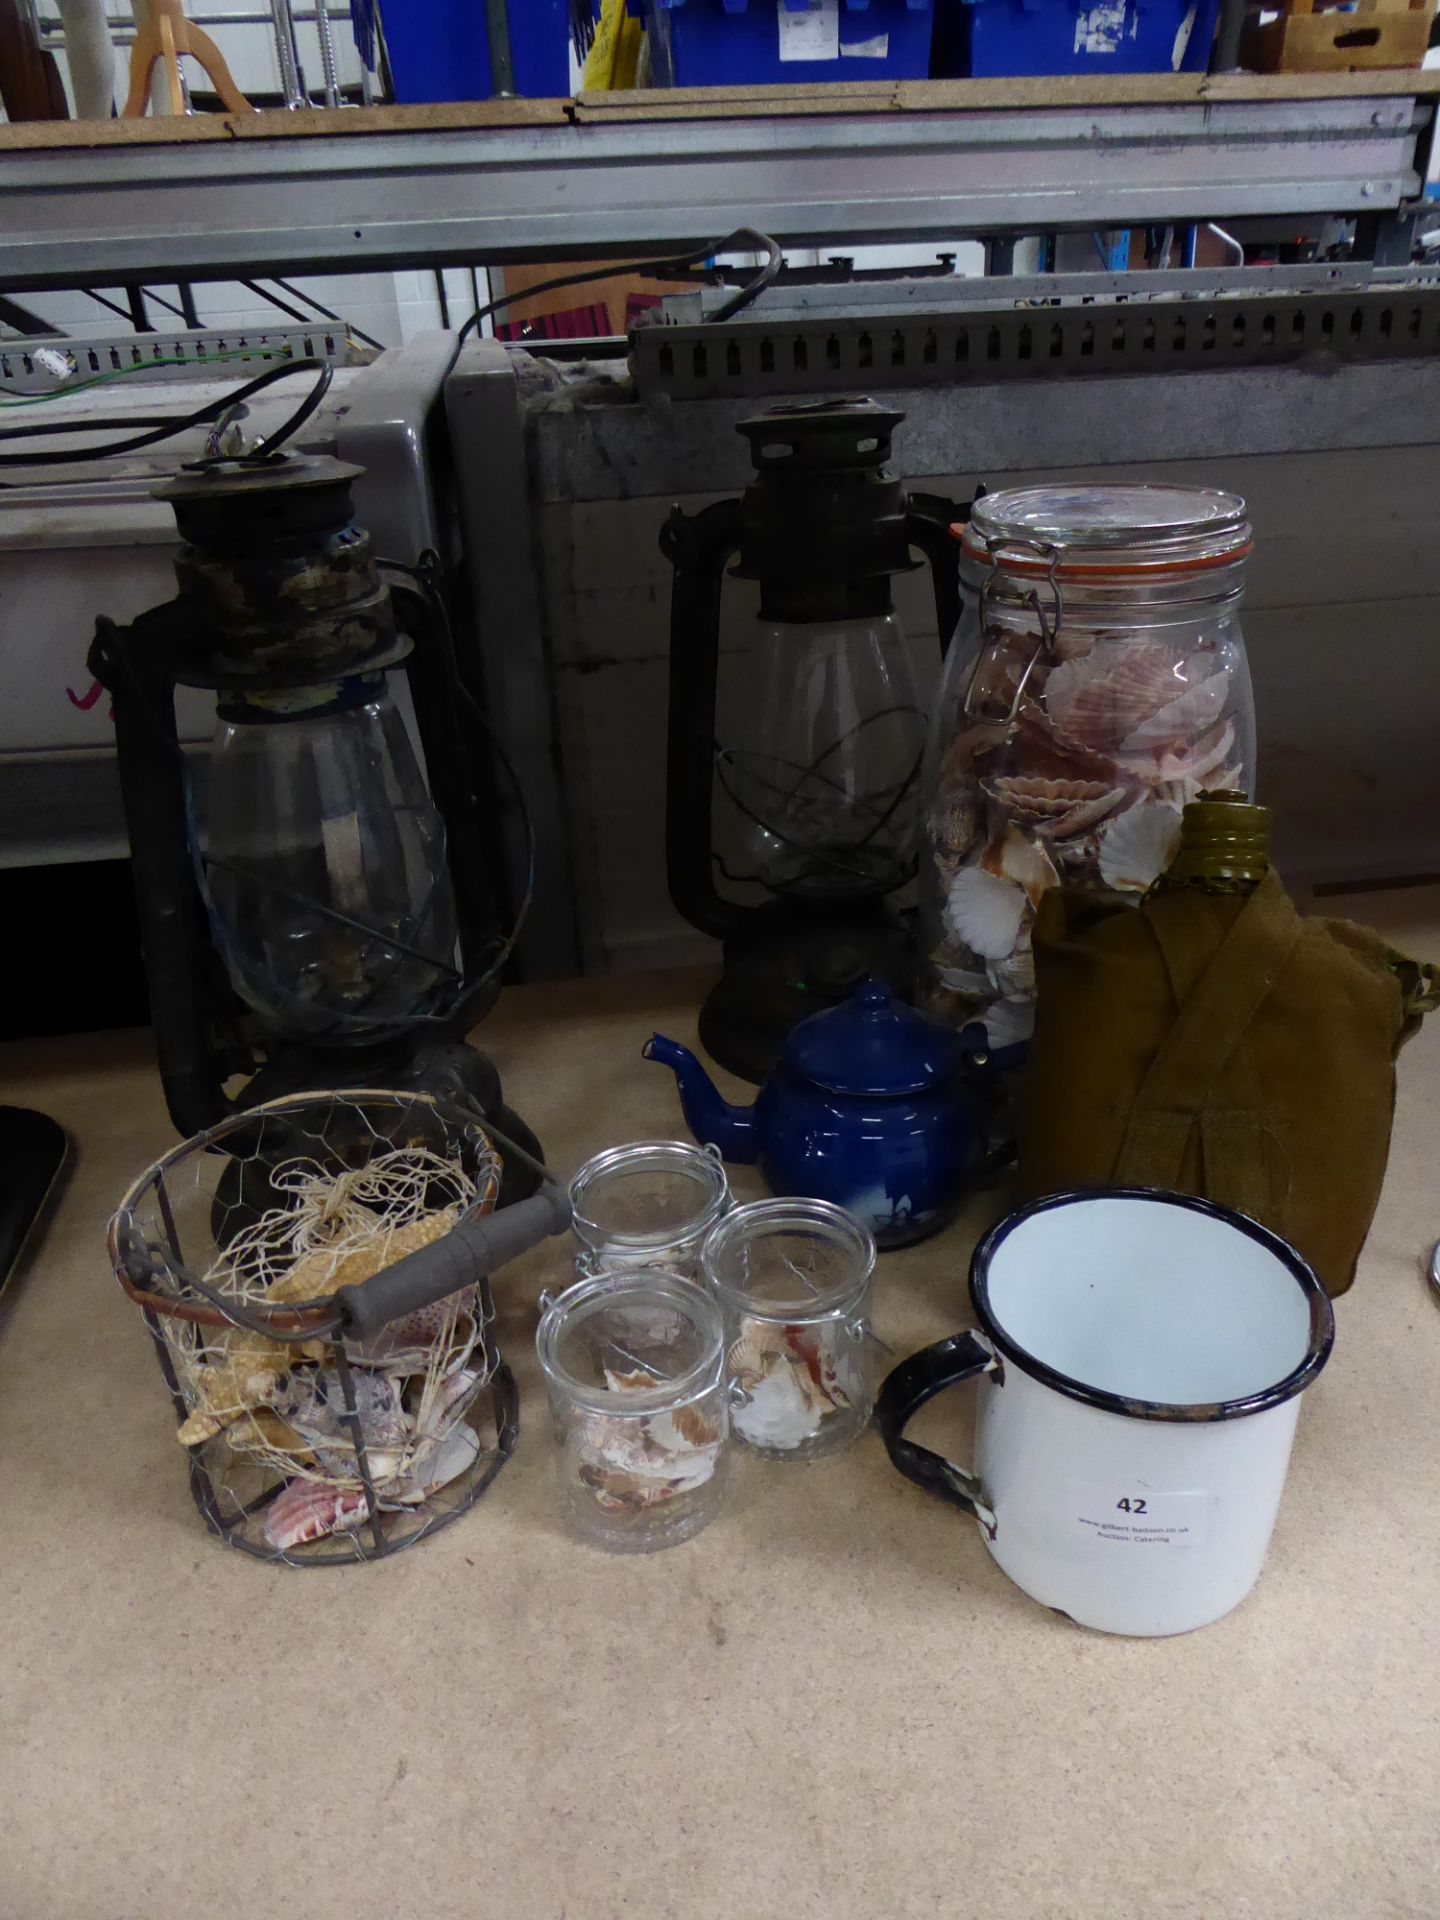 * misc display items - lamps, jars, shells, etc